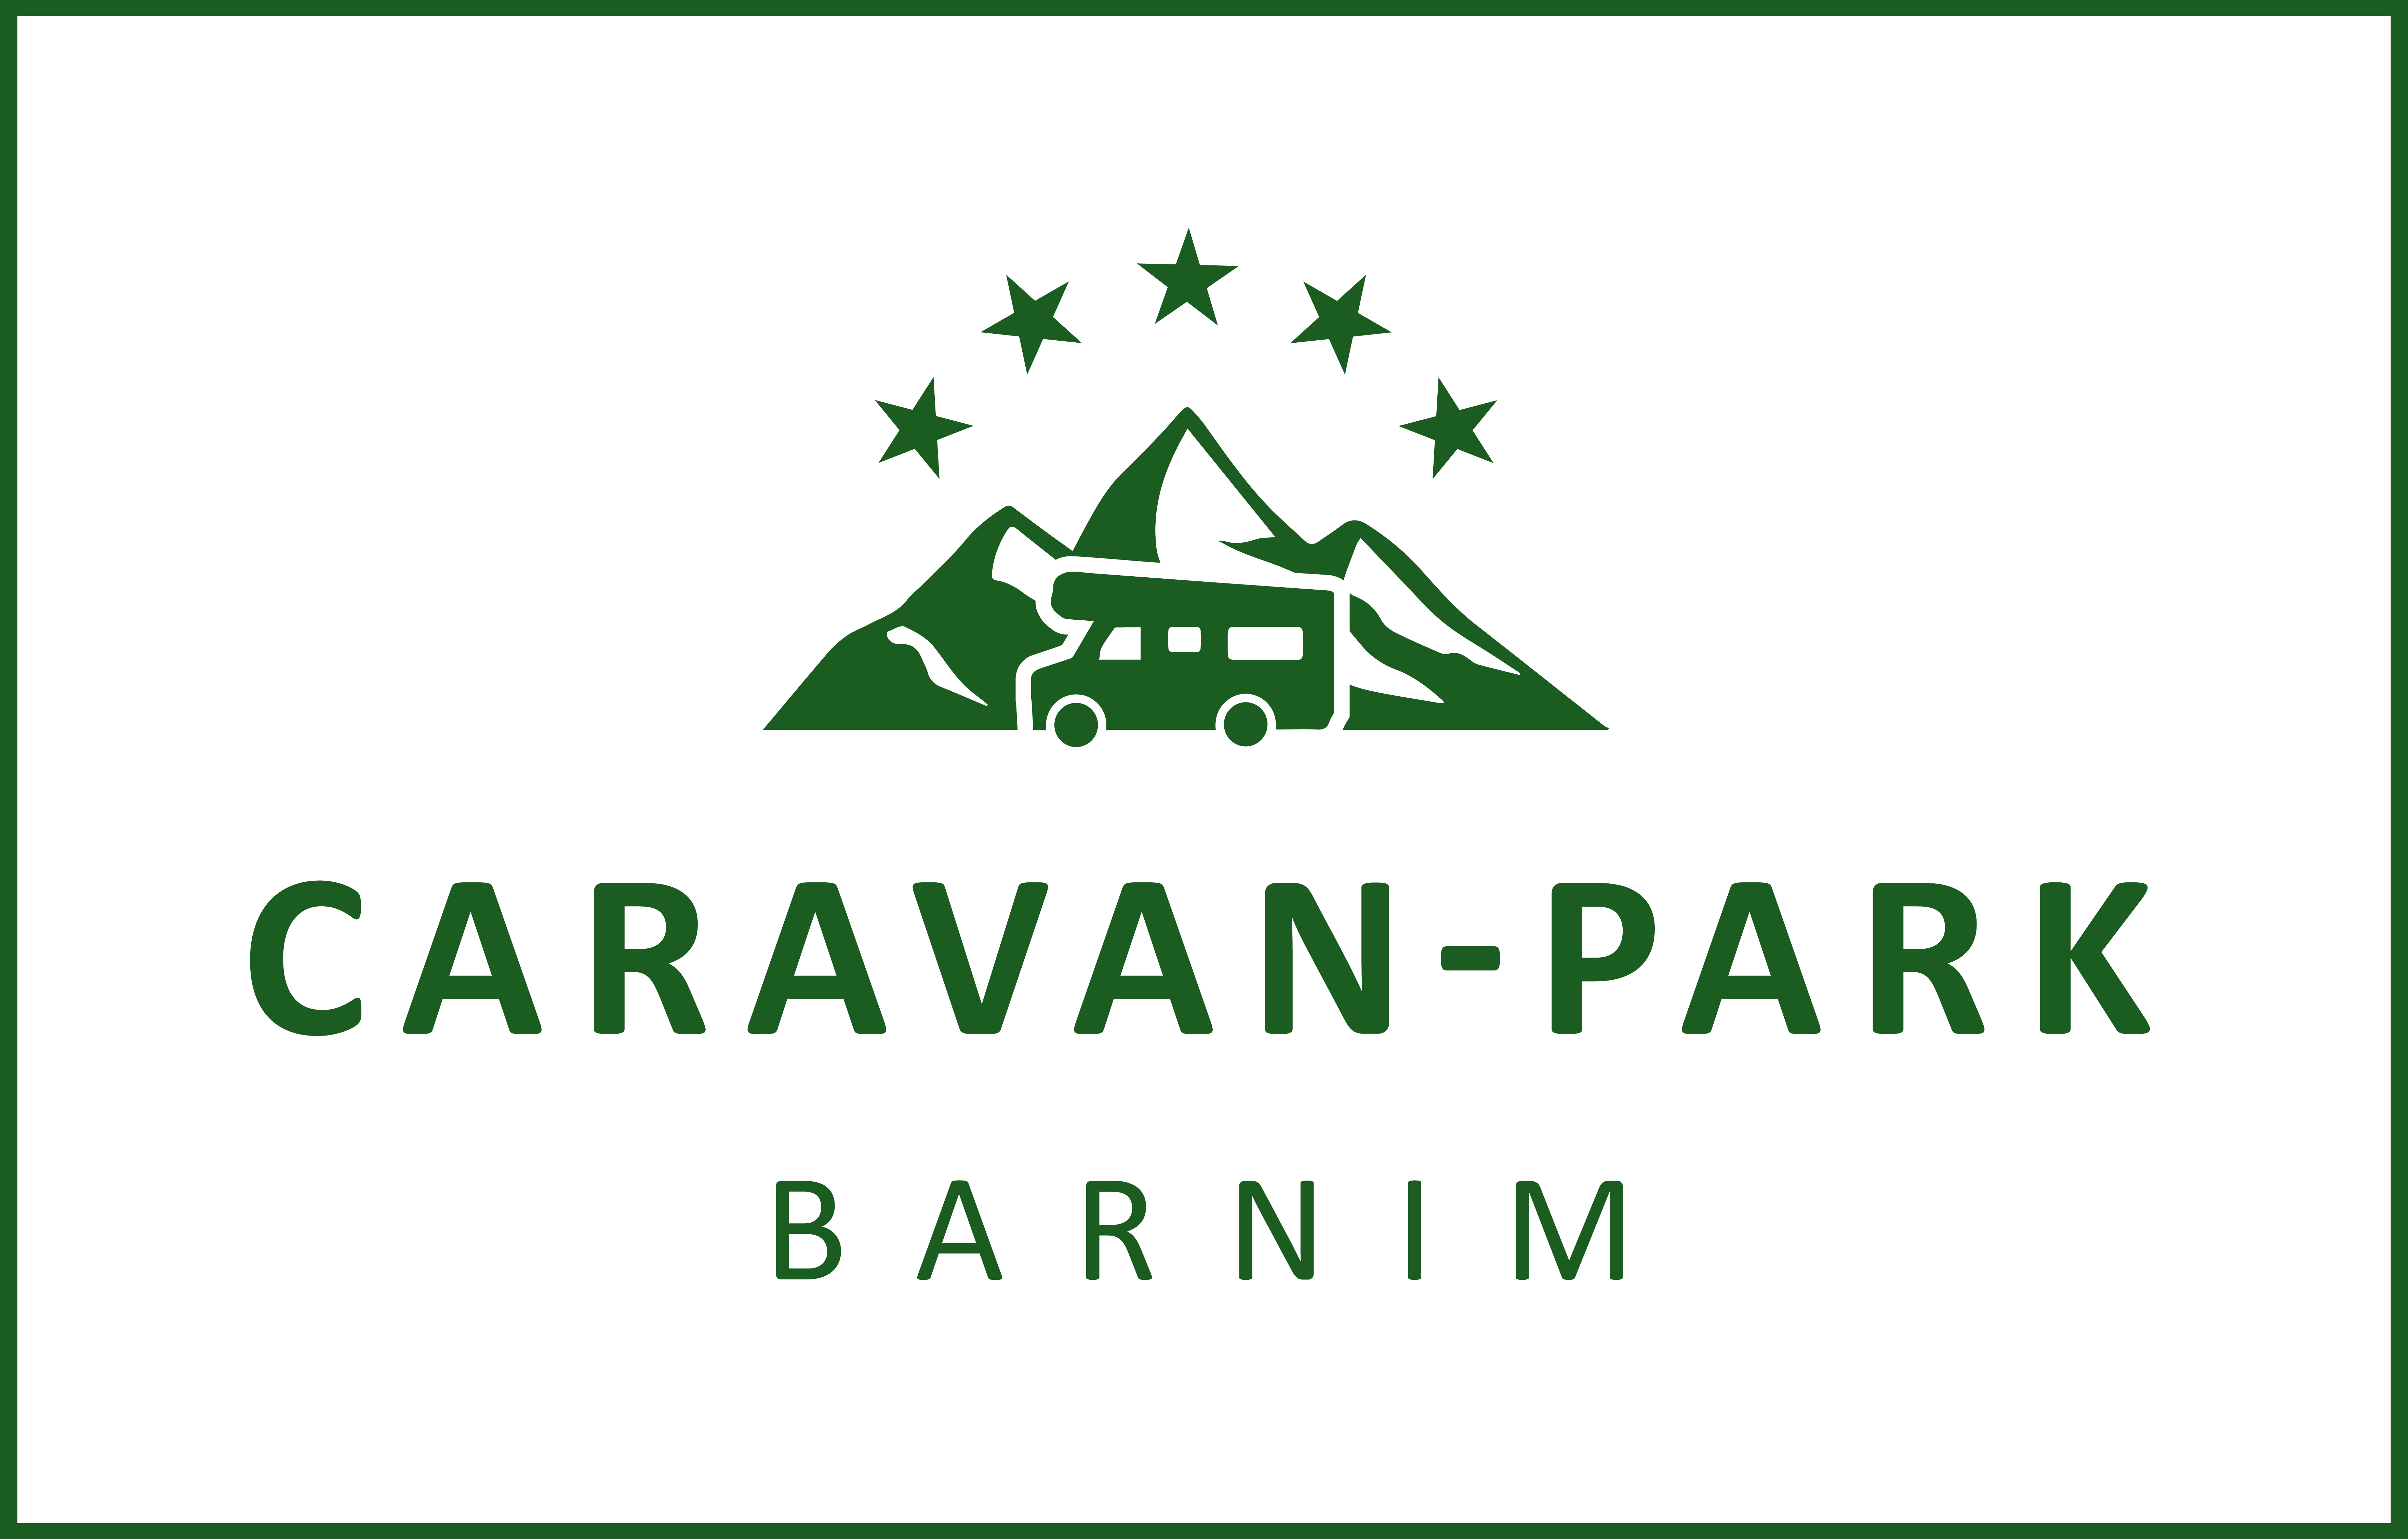 Caravan Park Barnim GmbH